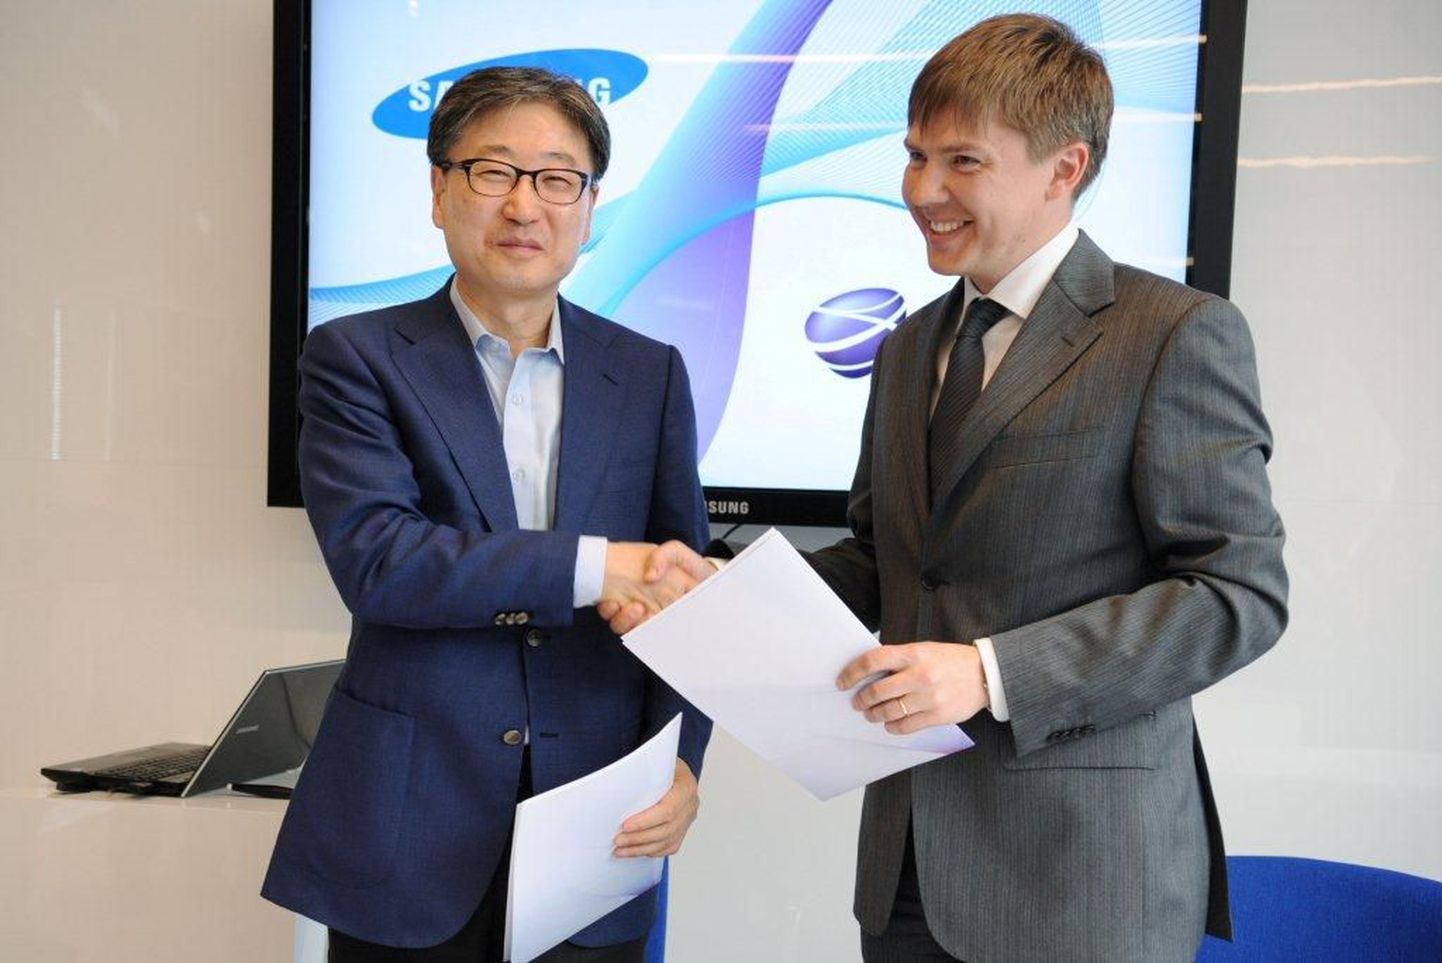 Elioni juht Arti Ots ja Samsungi esindaja Boo-Keun Yoon koostöölepet allkirjastamas.